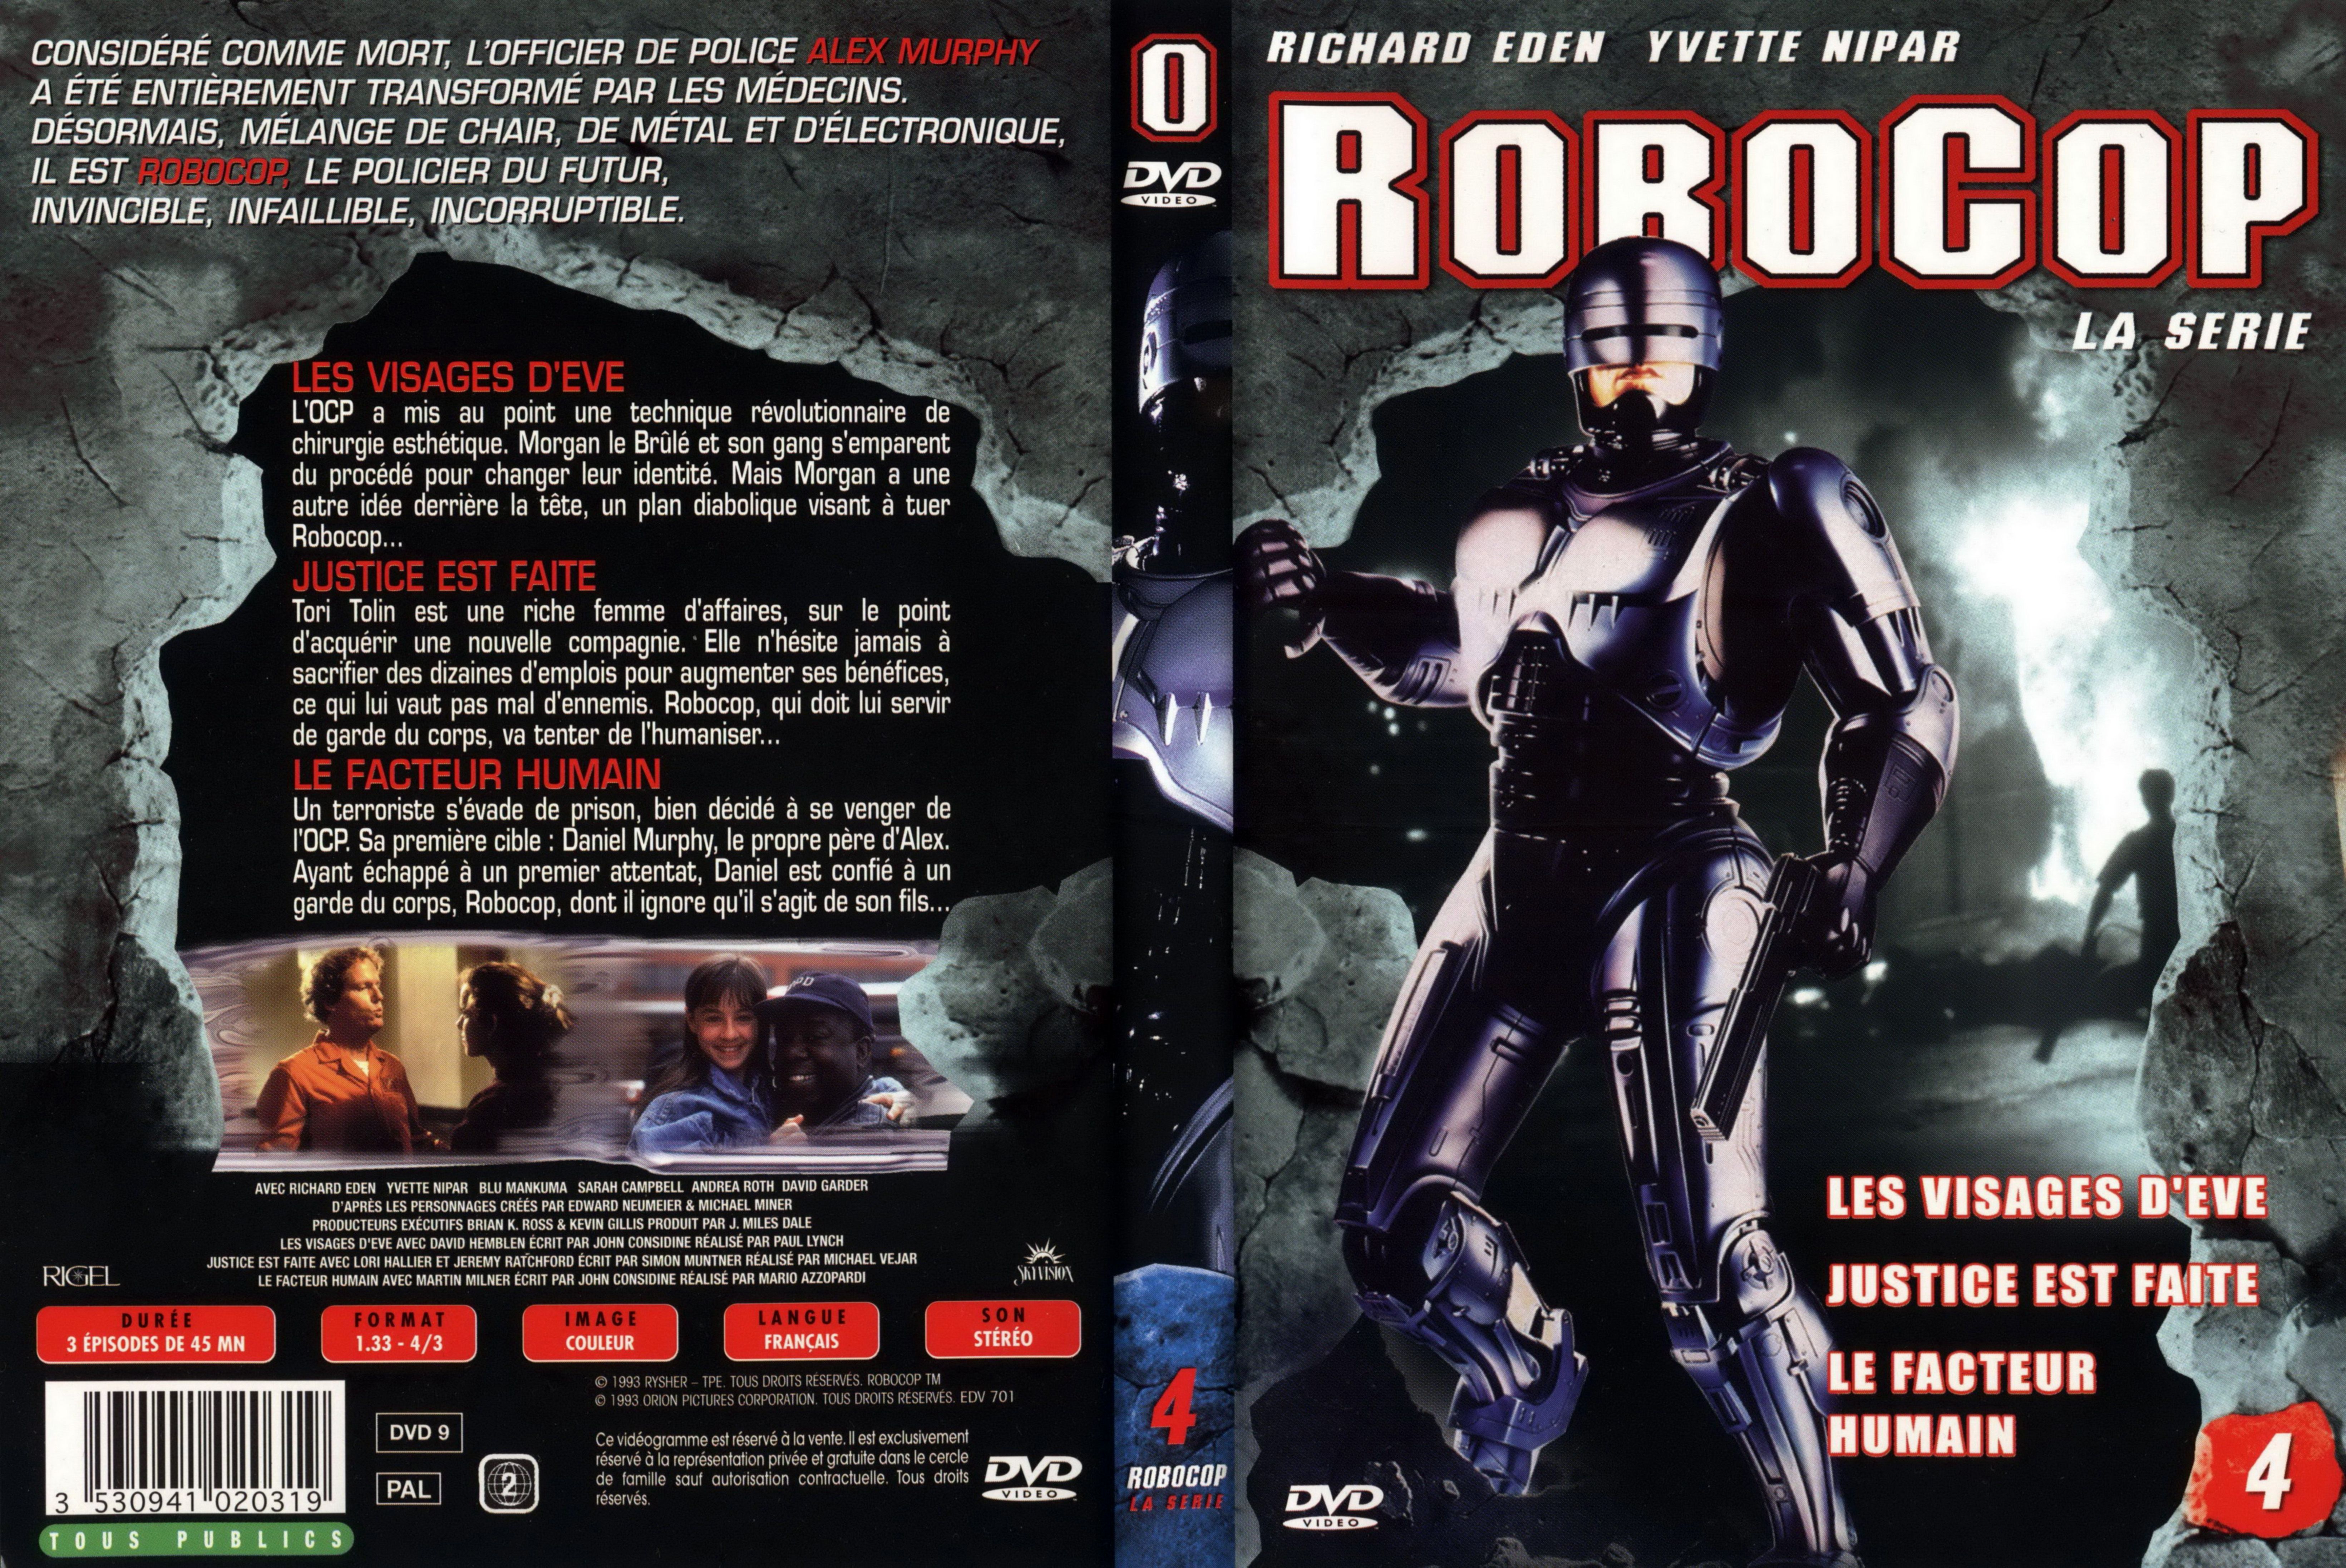 Jaquette DVD Robocop la srie vol 4